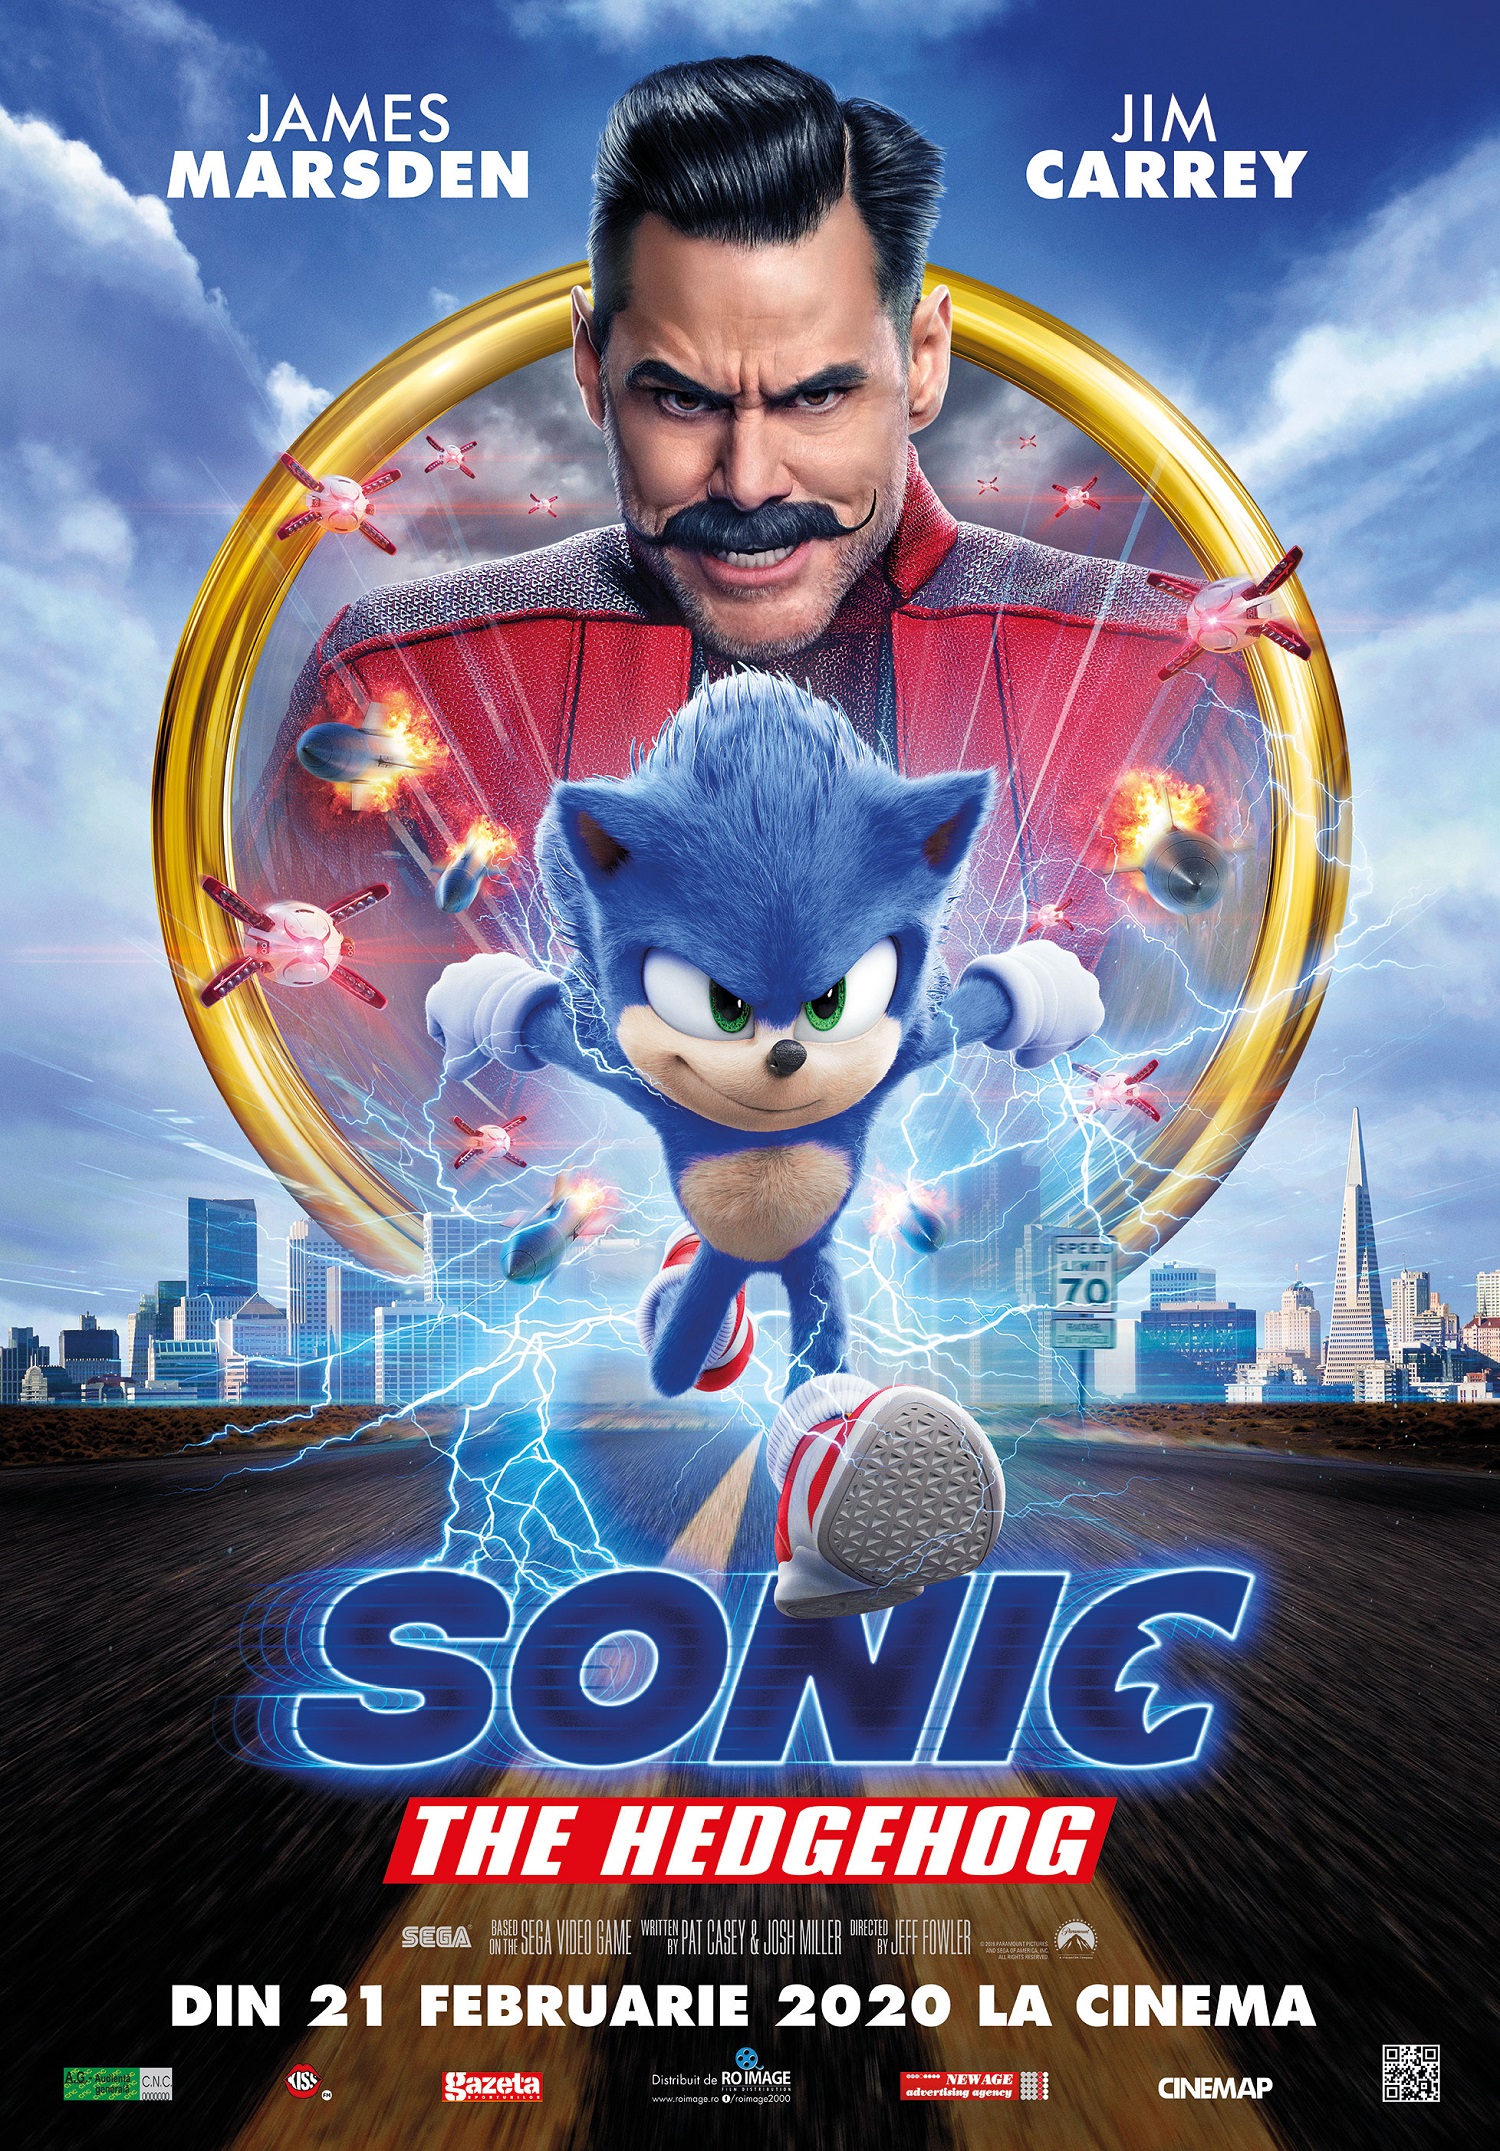 Sonic the Hedgehog filmul POSTER ROMANIA